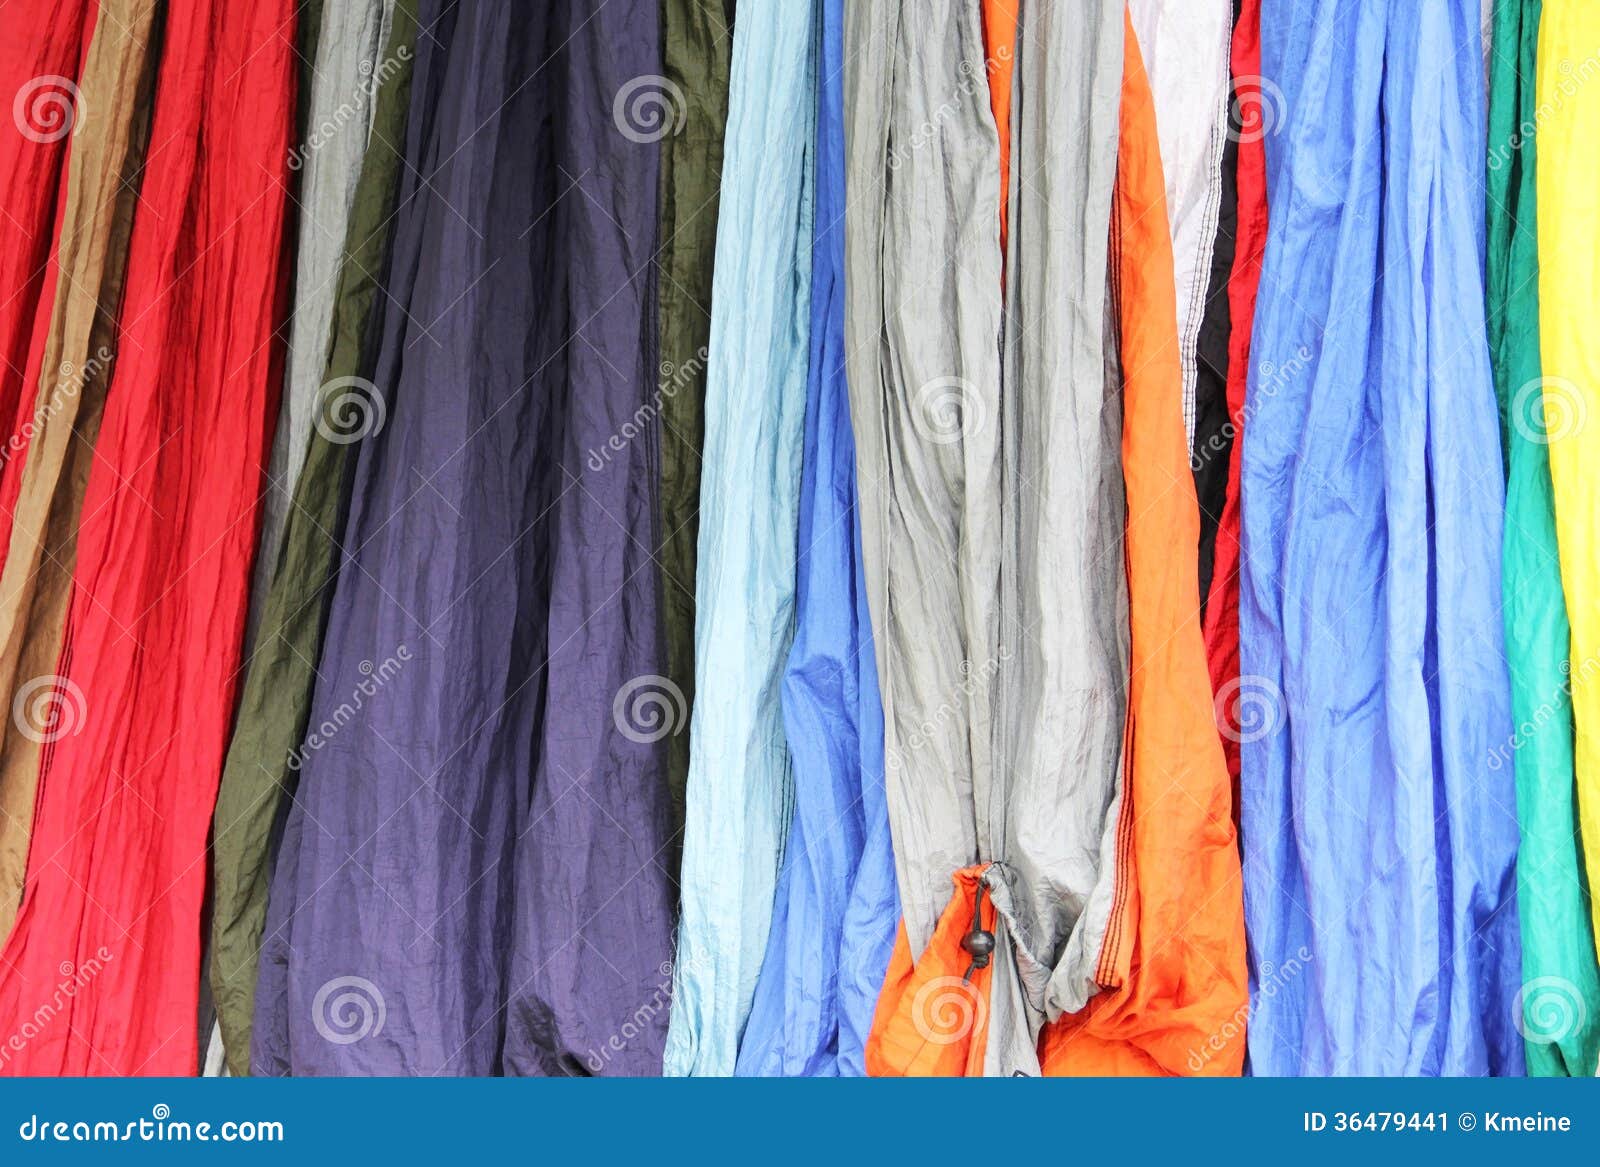 Color Selection of Nylon Fabrics Stock Image - Image of selection ...